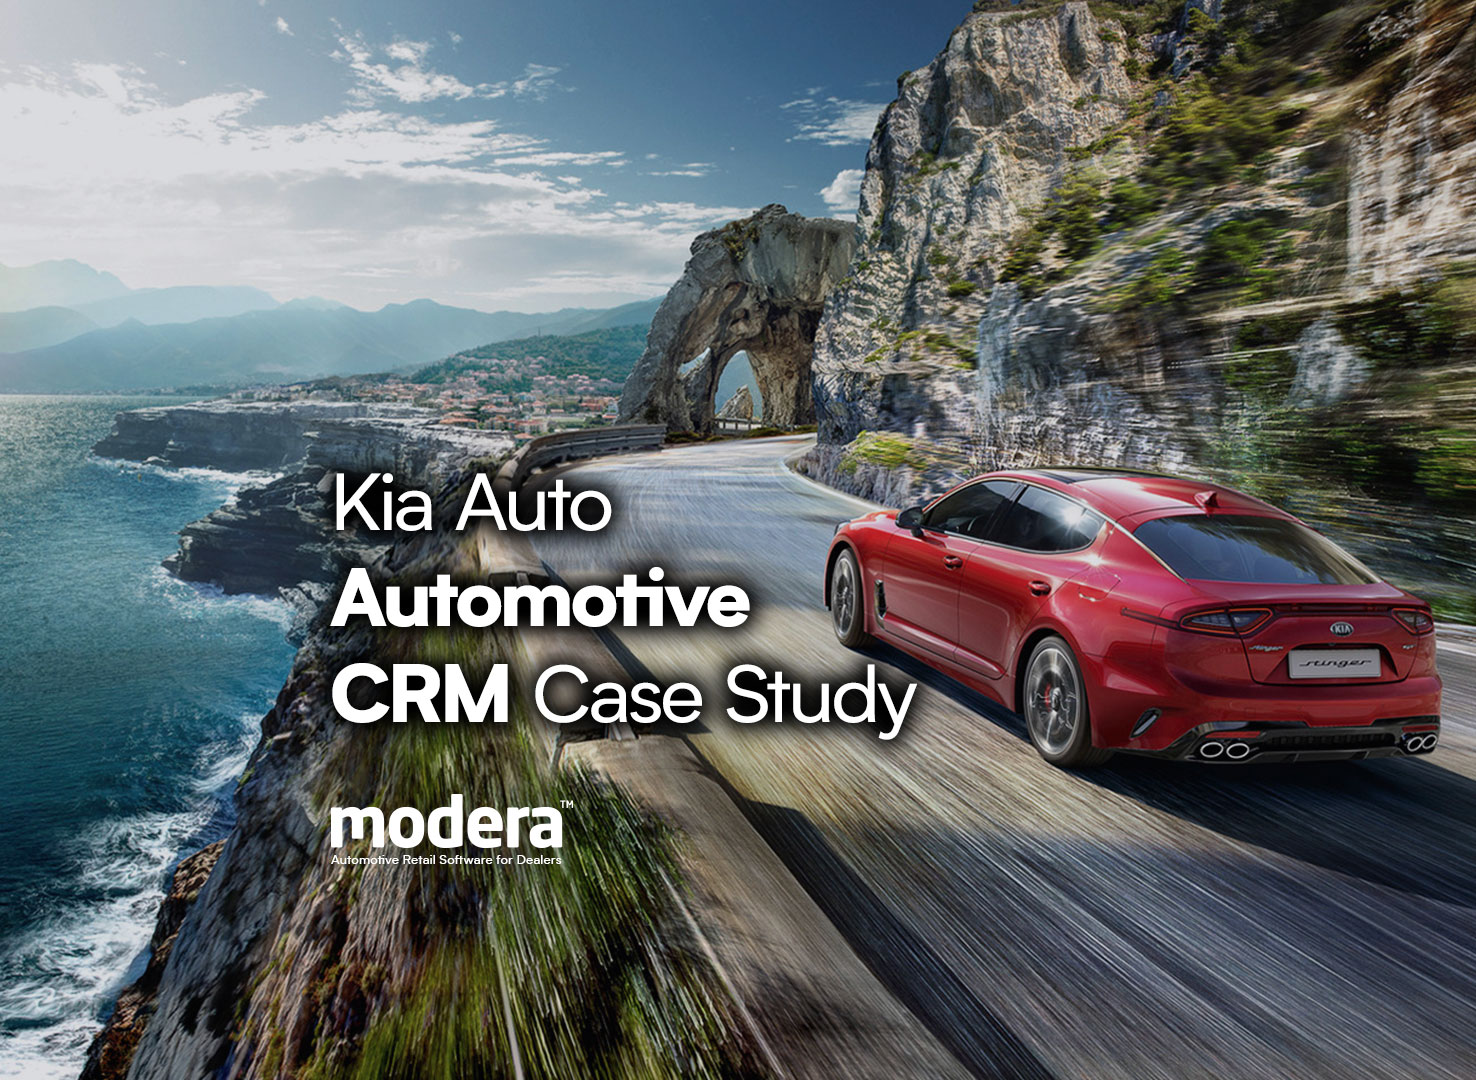 Automotive CRM Case Study for Kia Auto - Modera